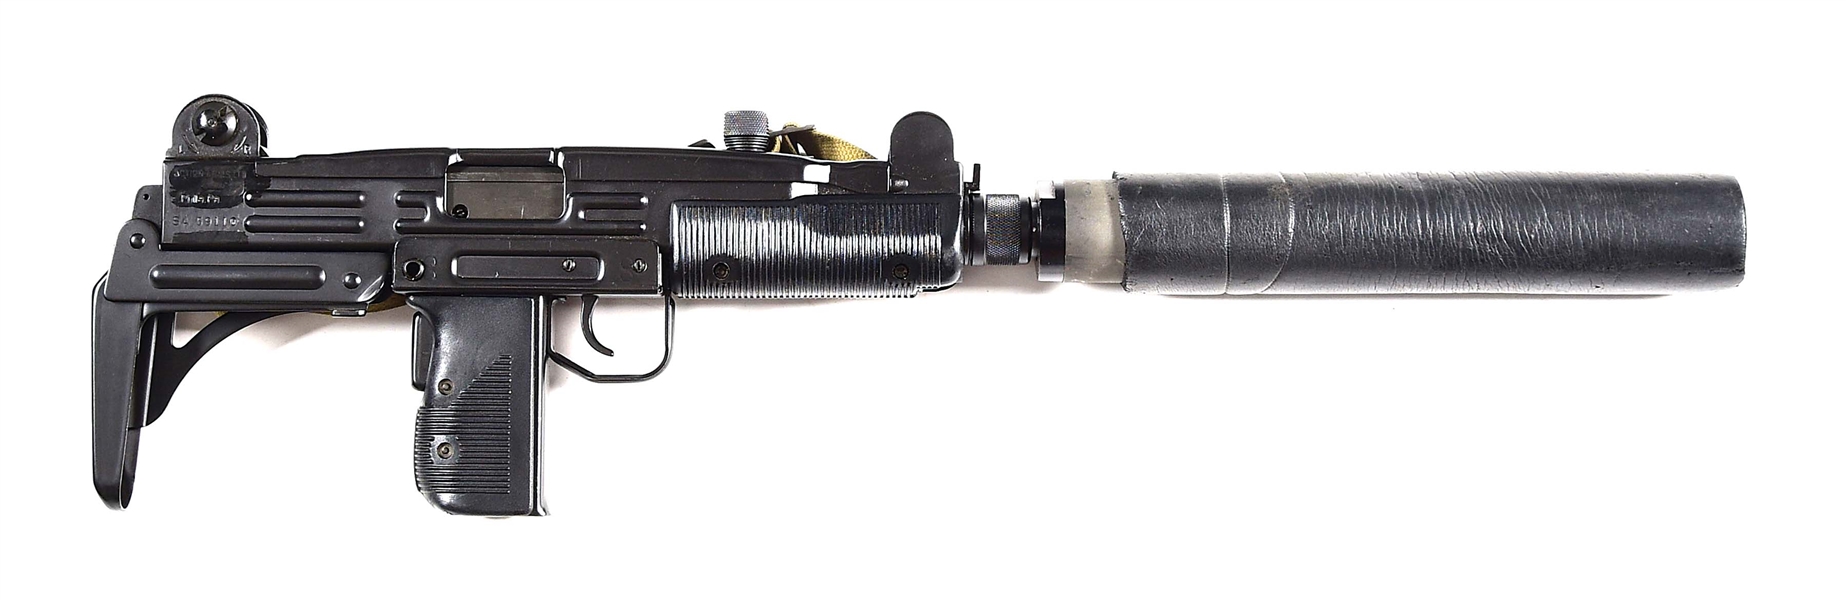 (N) GUN TRADER REGISTERED UZI MODEL B MACHINE GUN WITH SWD SUPPRESSOR AND ACCESSORIES (FULLY TRANSFERABLE).